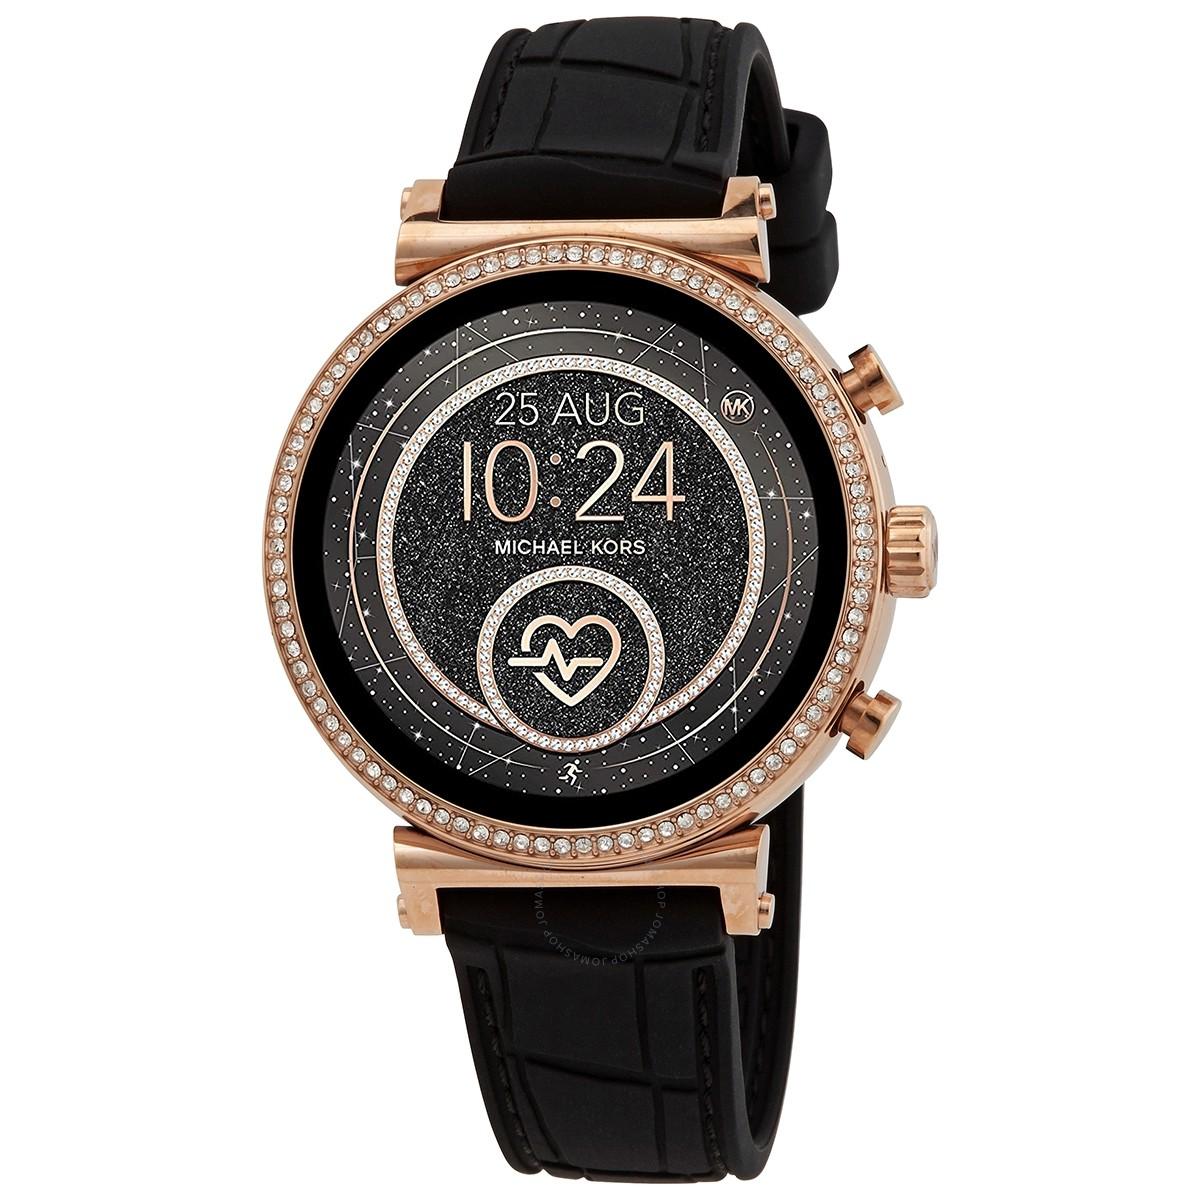 Michael Kors Access Gen 4 Sofie Smartwatch for $99.99 Shipped